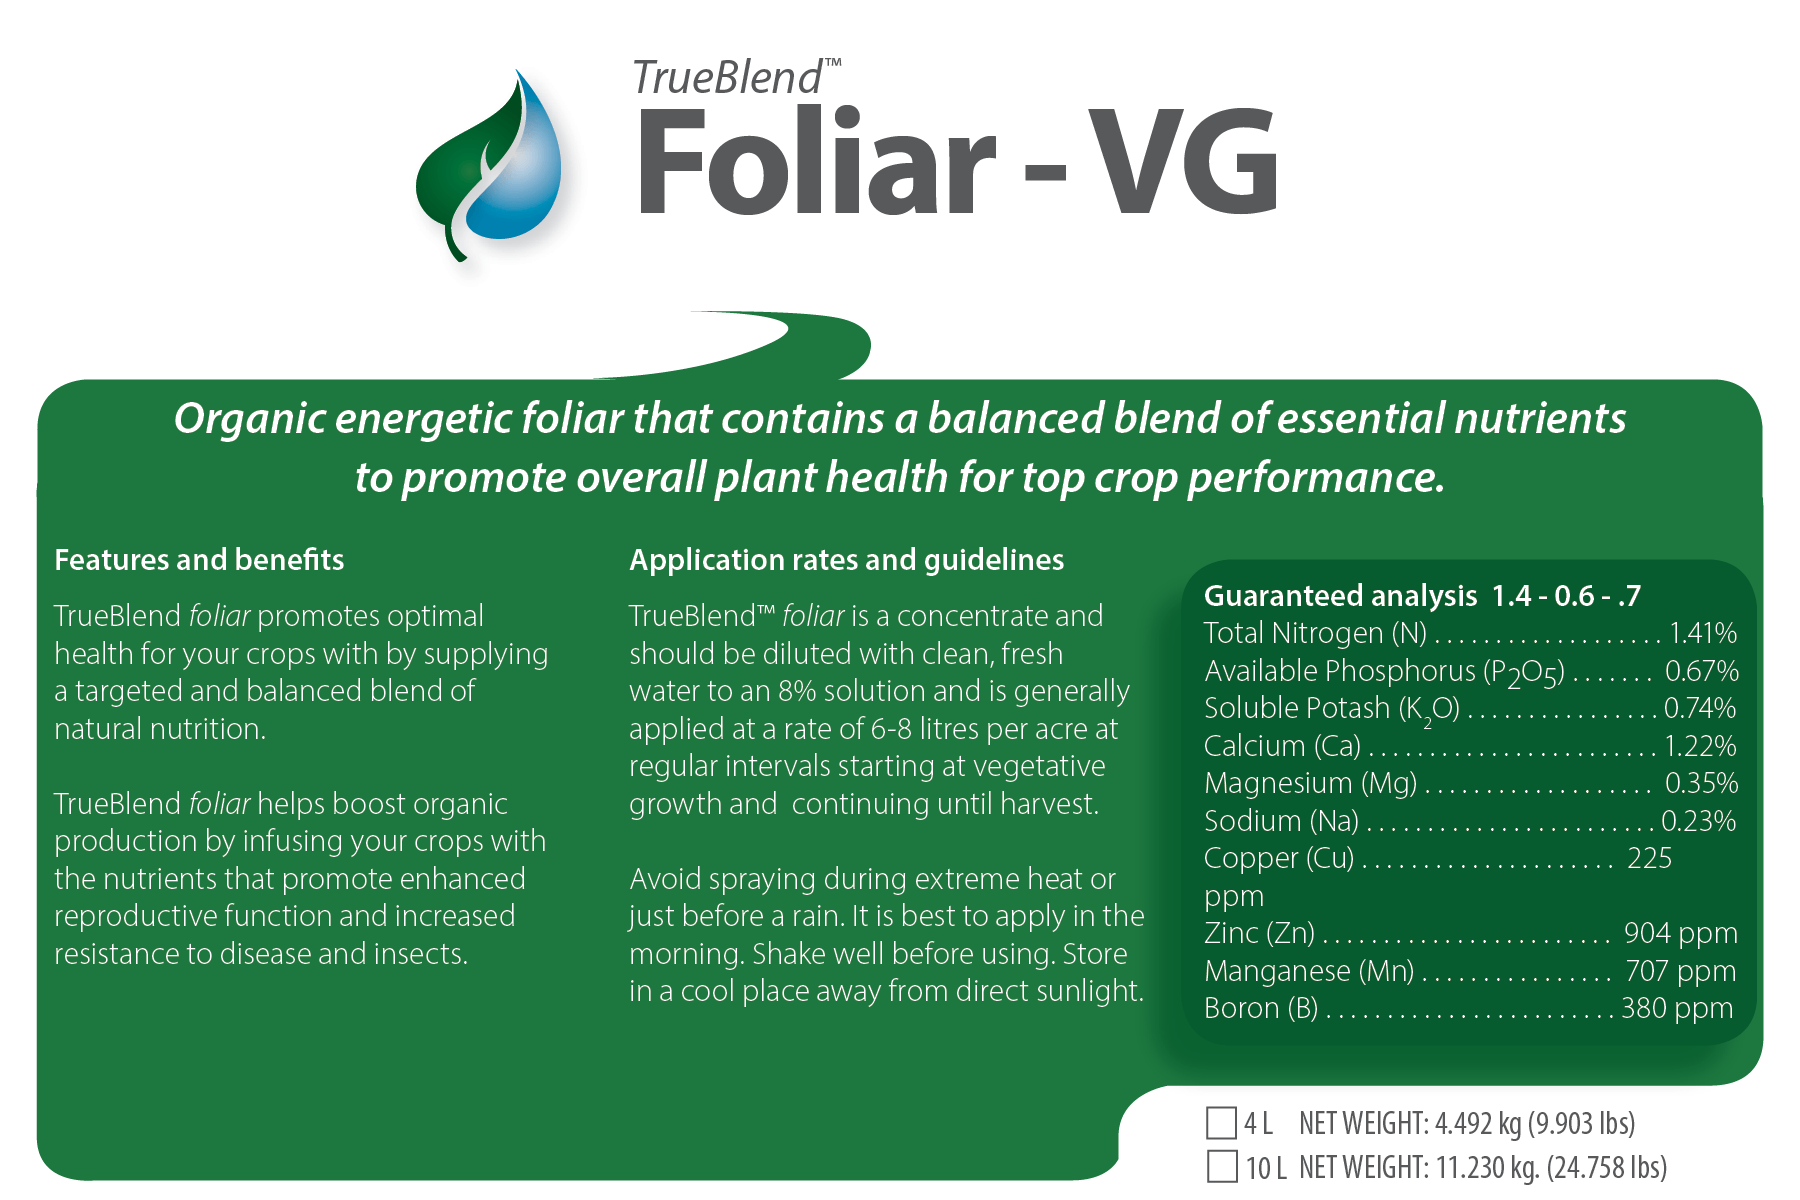 Cool VG Logo - TrueBlend Foliar VG